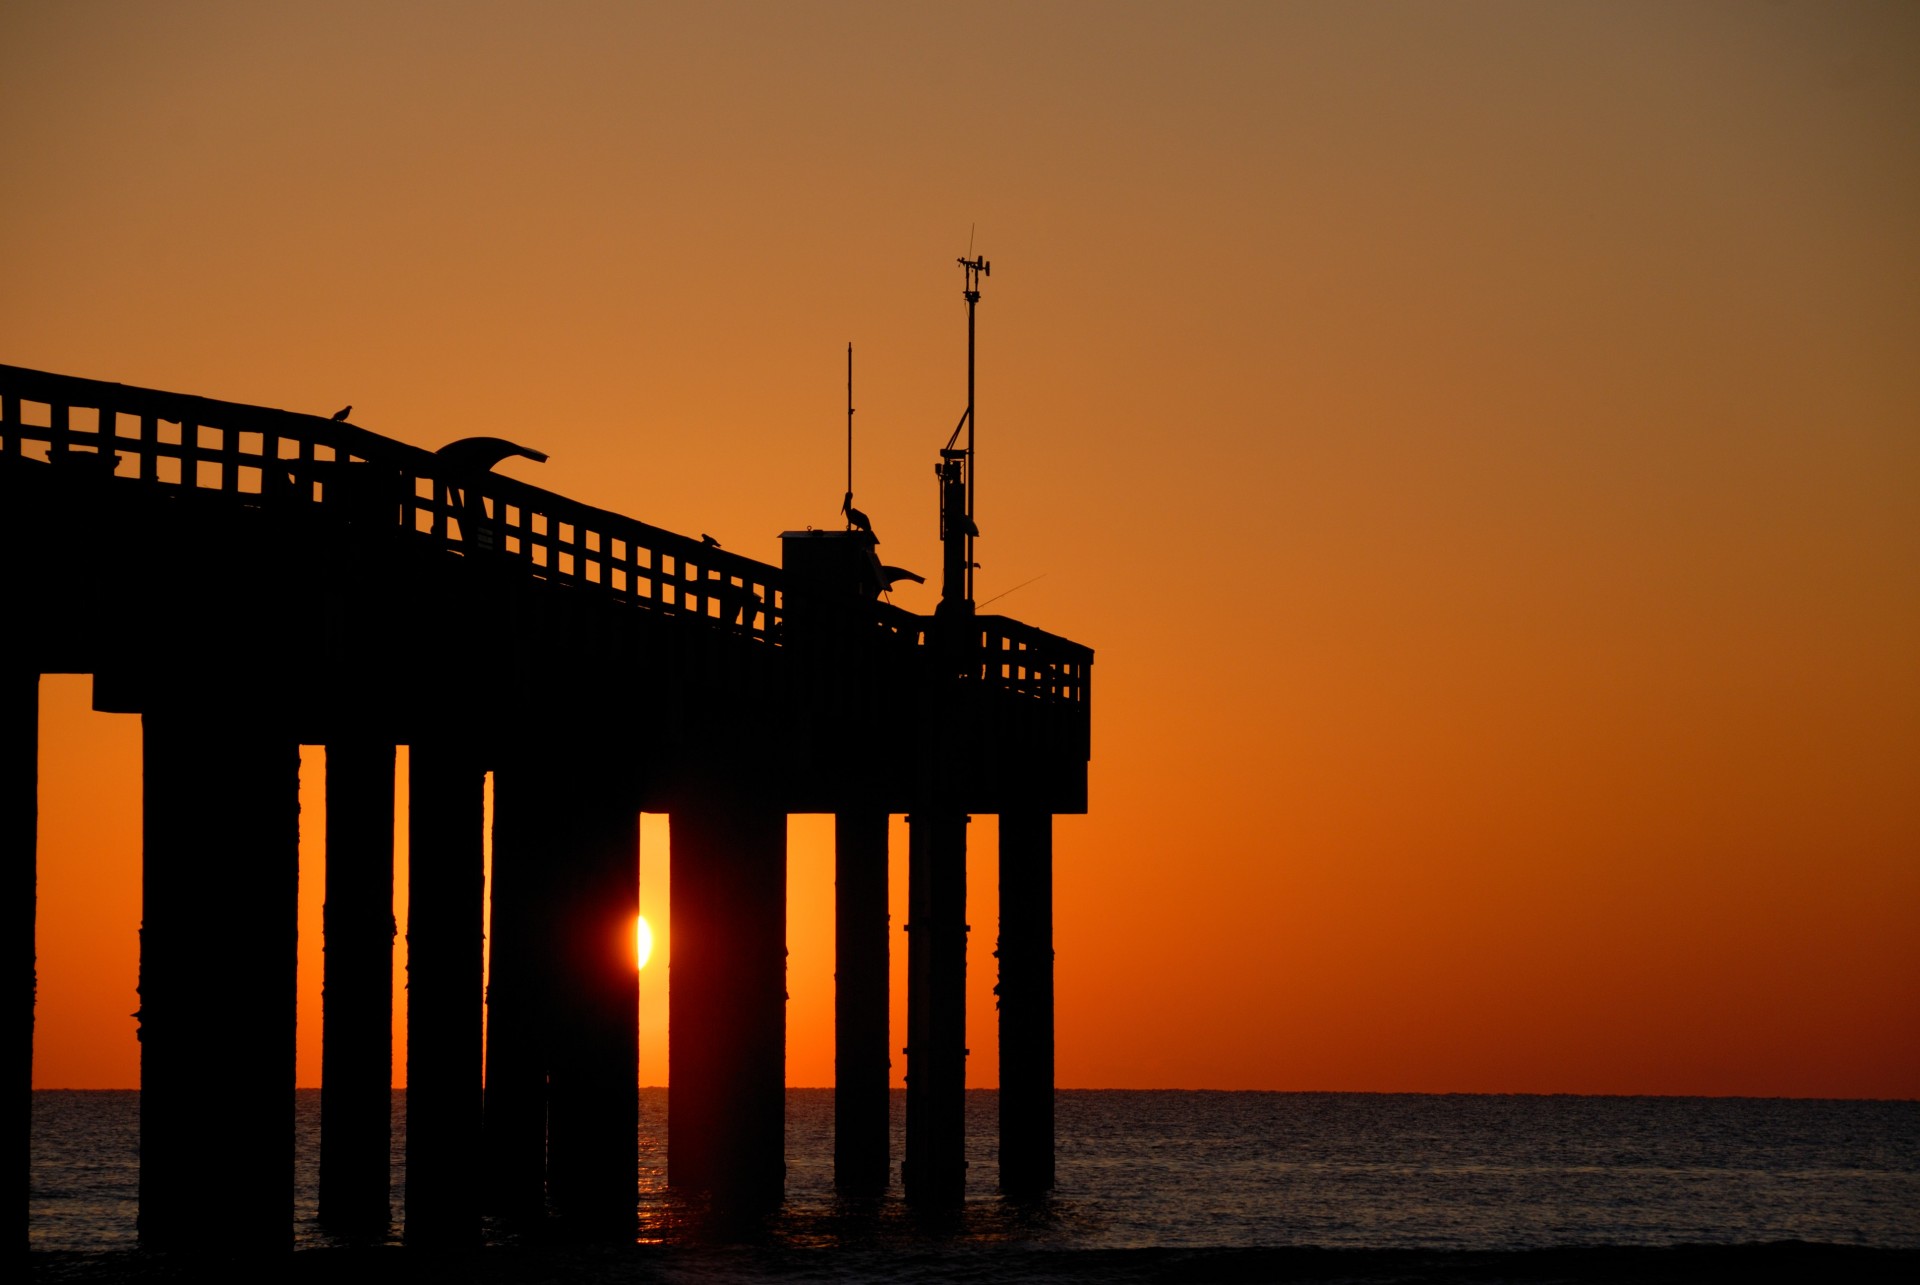 Fishing Pier při východu slunce